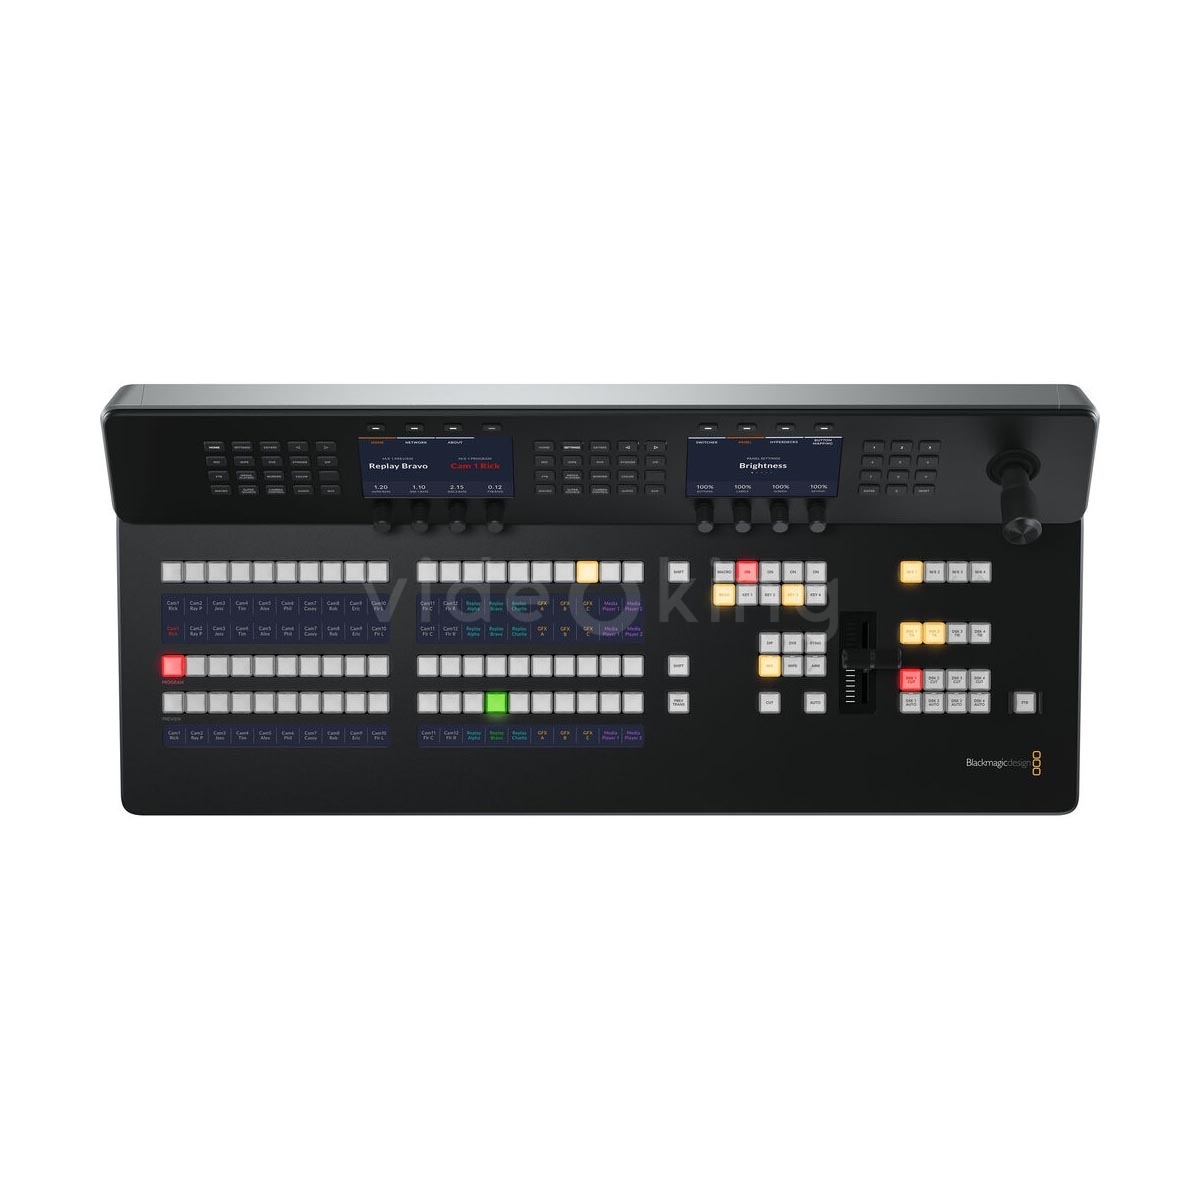 Roland XS-1HD Multi-Format Matrix Switcher - VideoKing EU Store